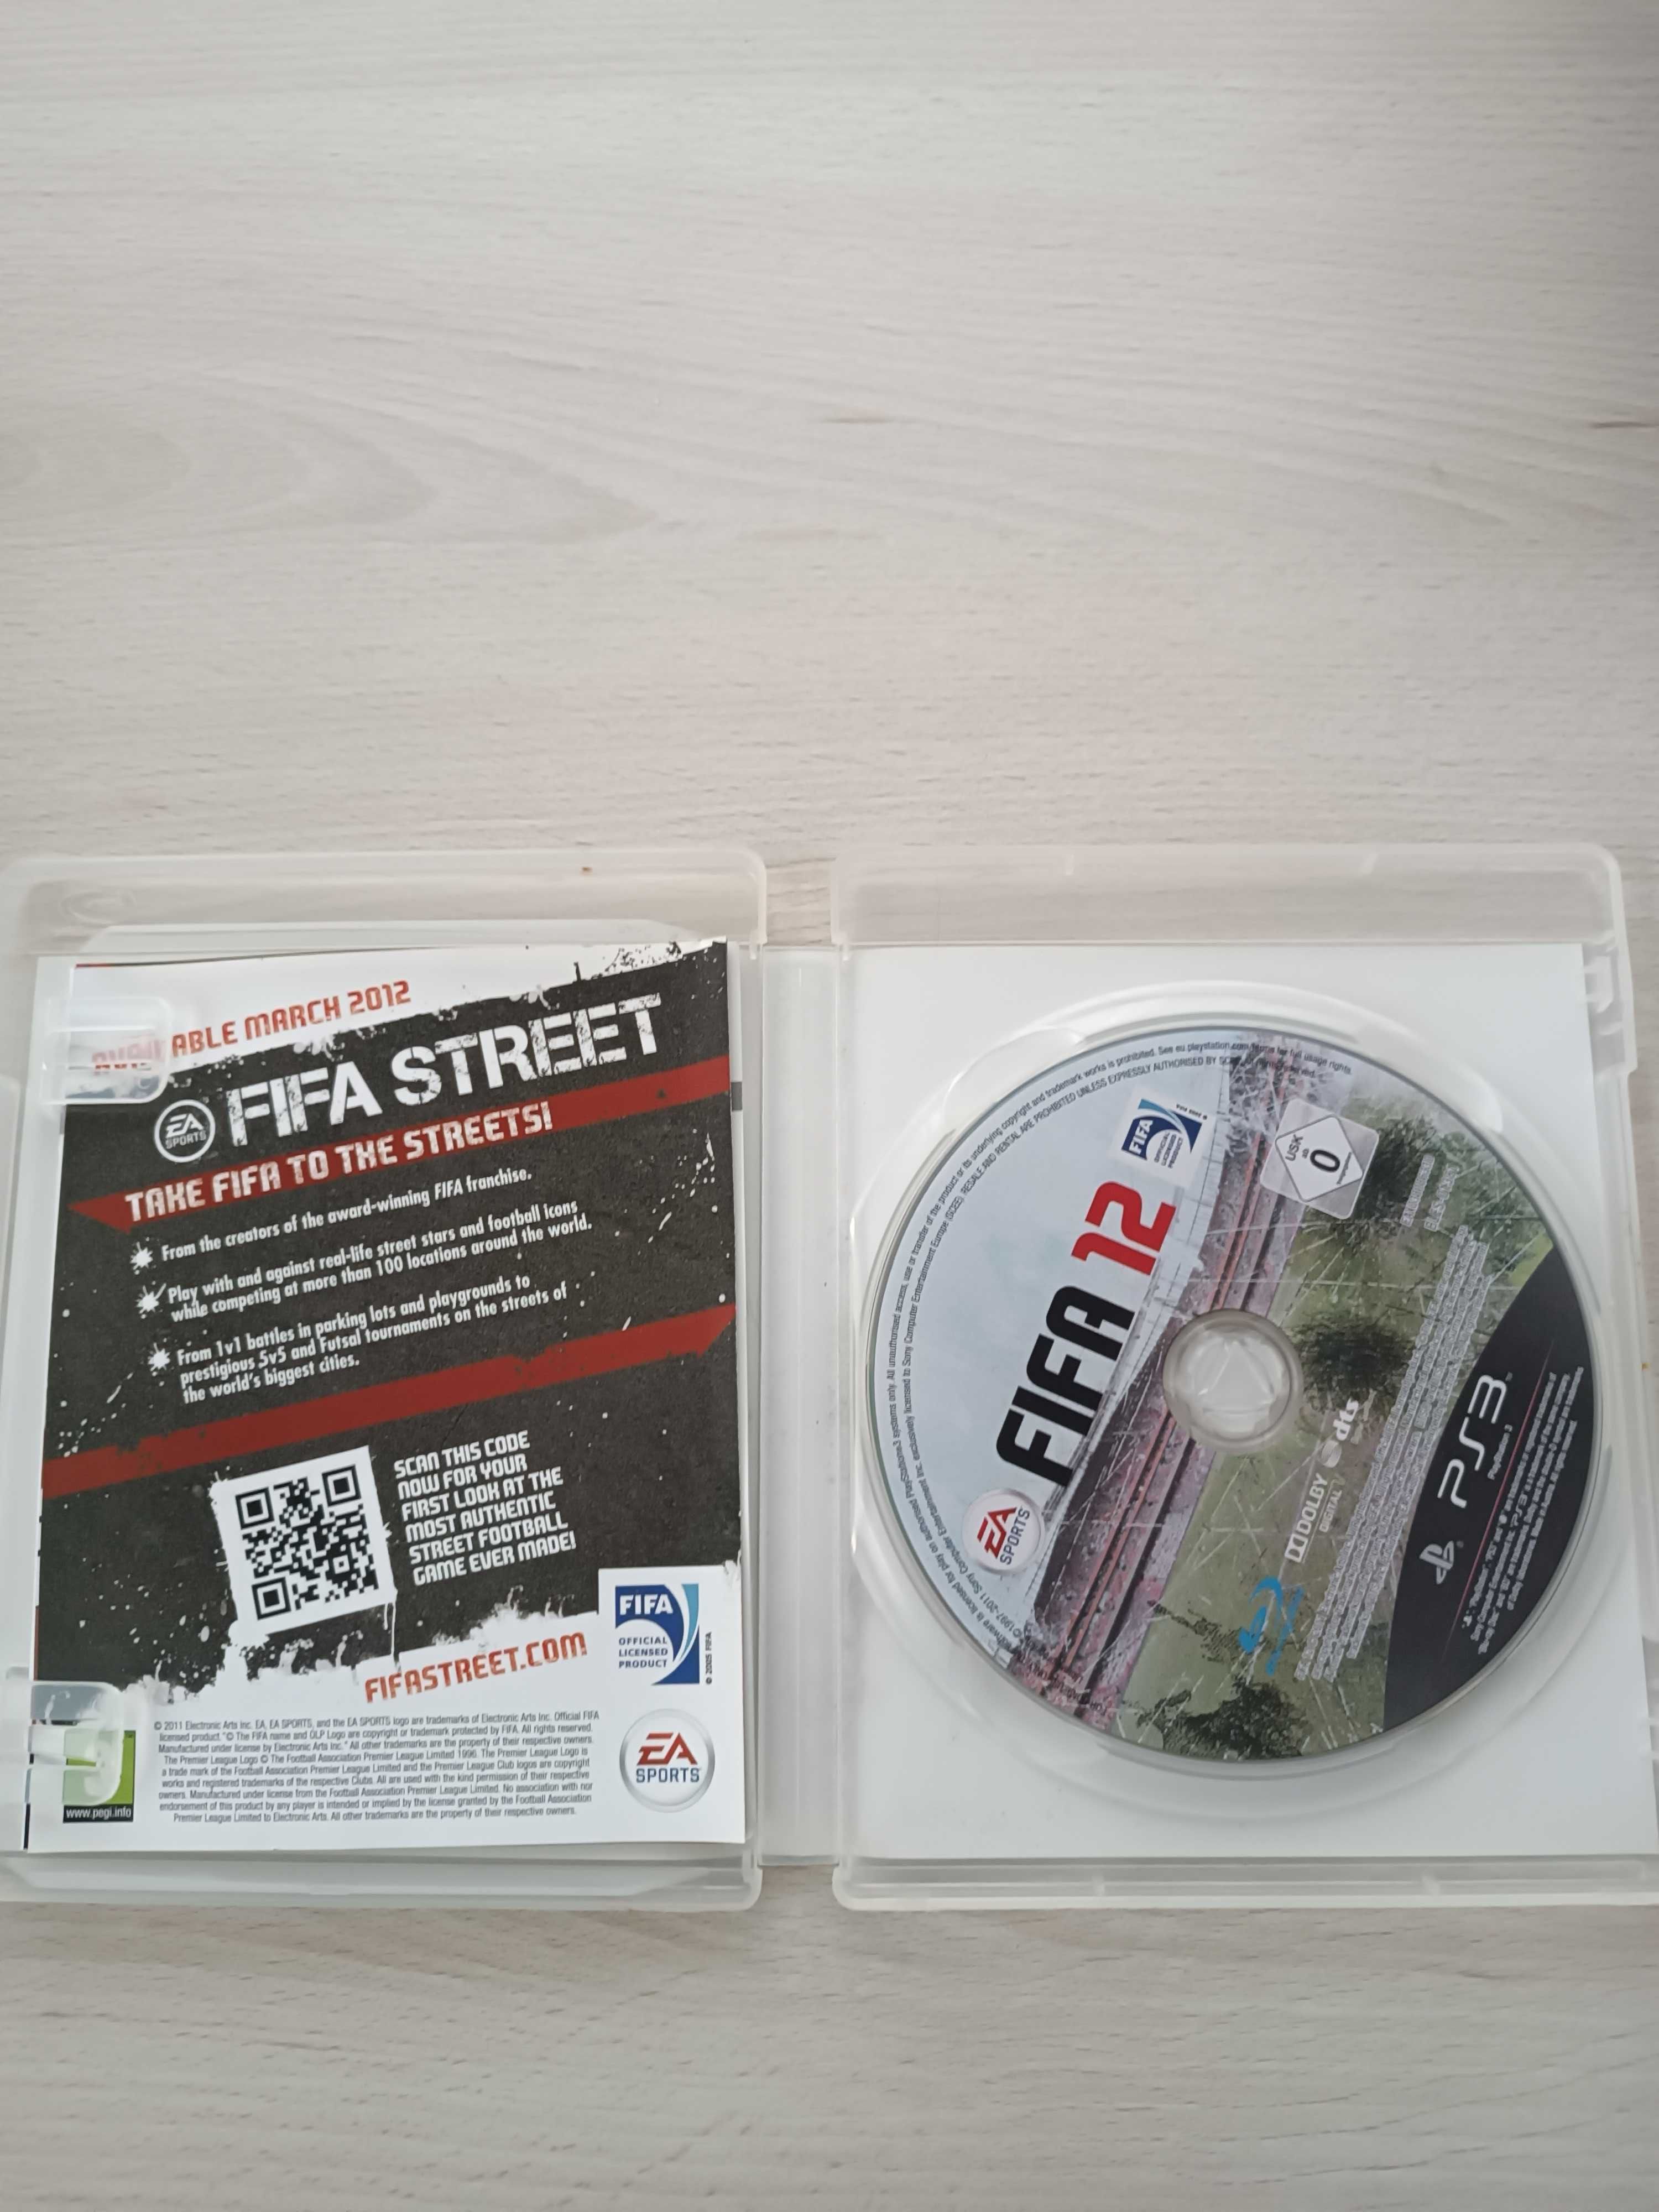 FIFA 12 gra na PS3